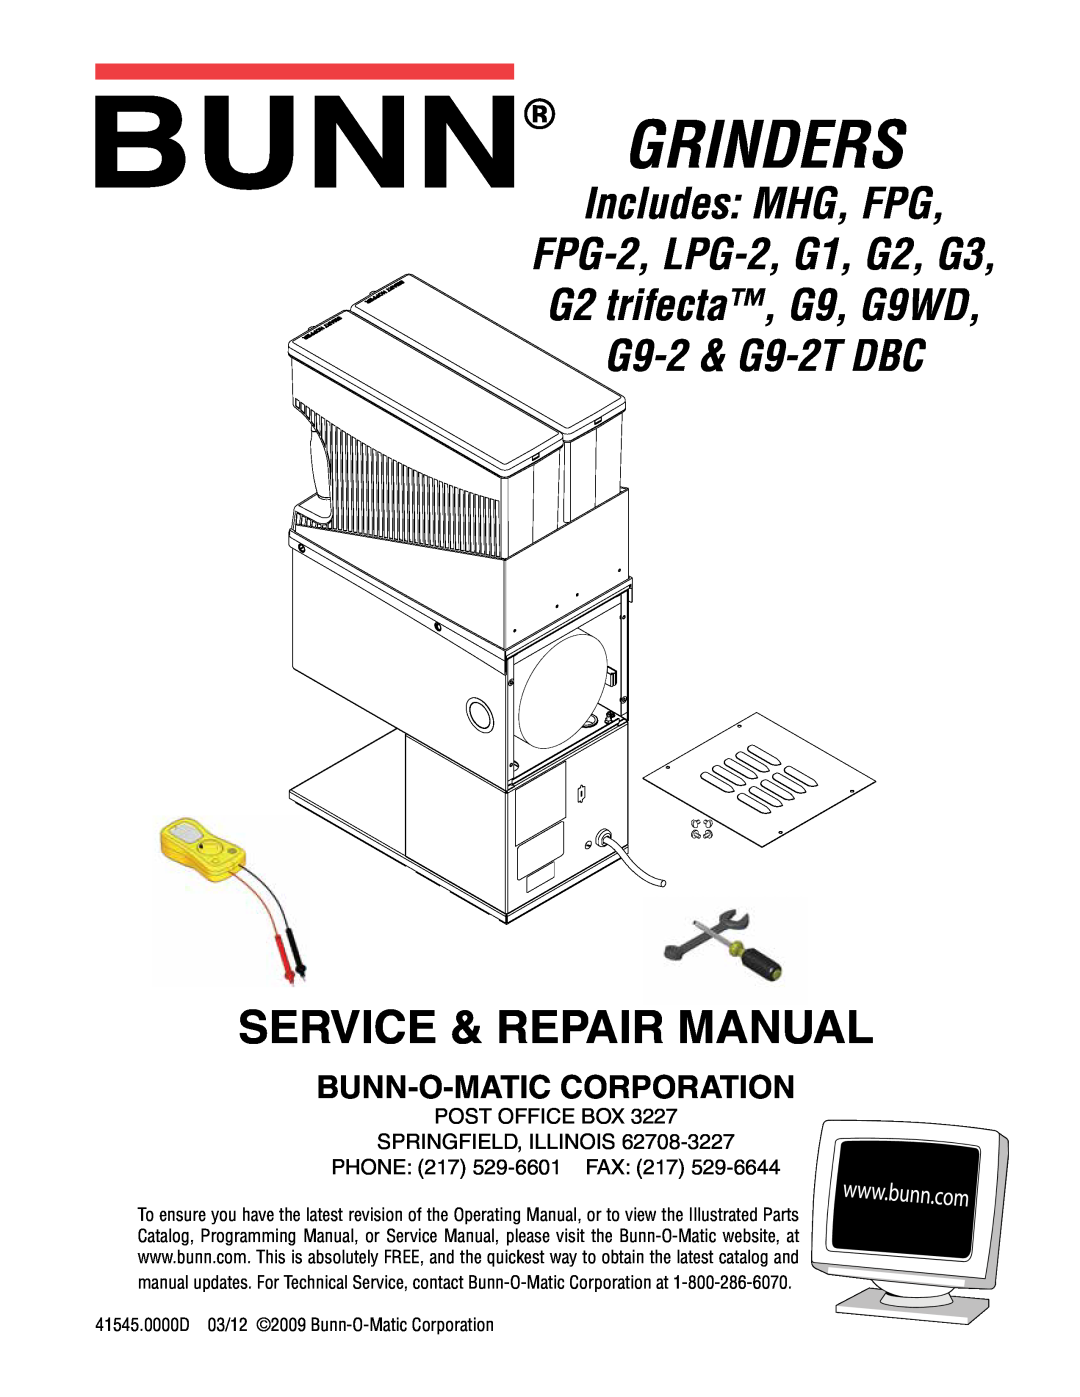 Bunn G9WD, LPG-2, G1, FPG-2 service manual Bunn-O-Matic Corporation, Grinders, Service & Repair Manual, G9-2 & G9-2T DBC 